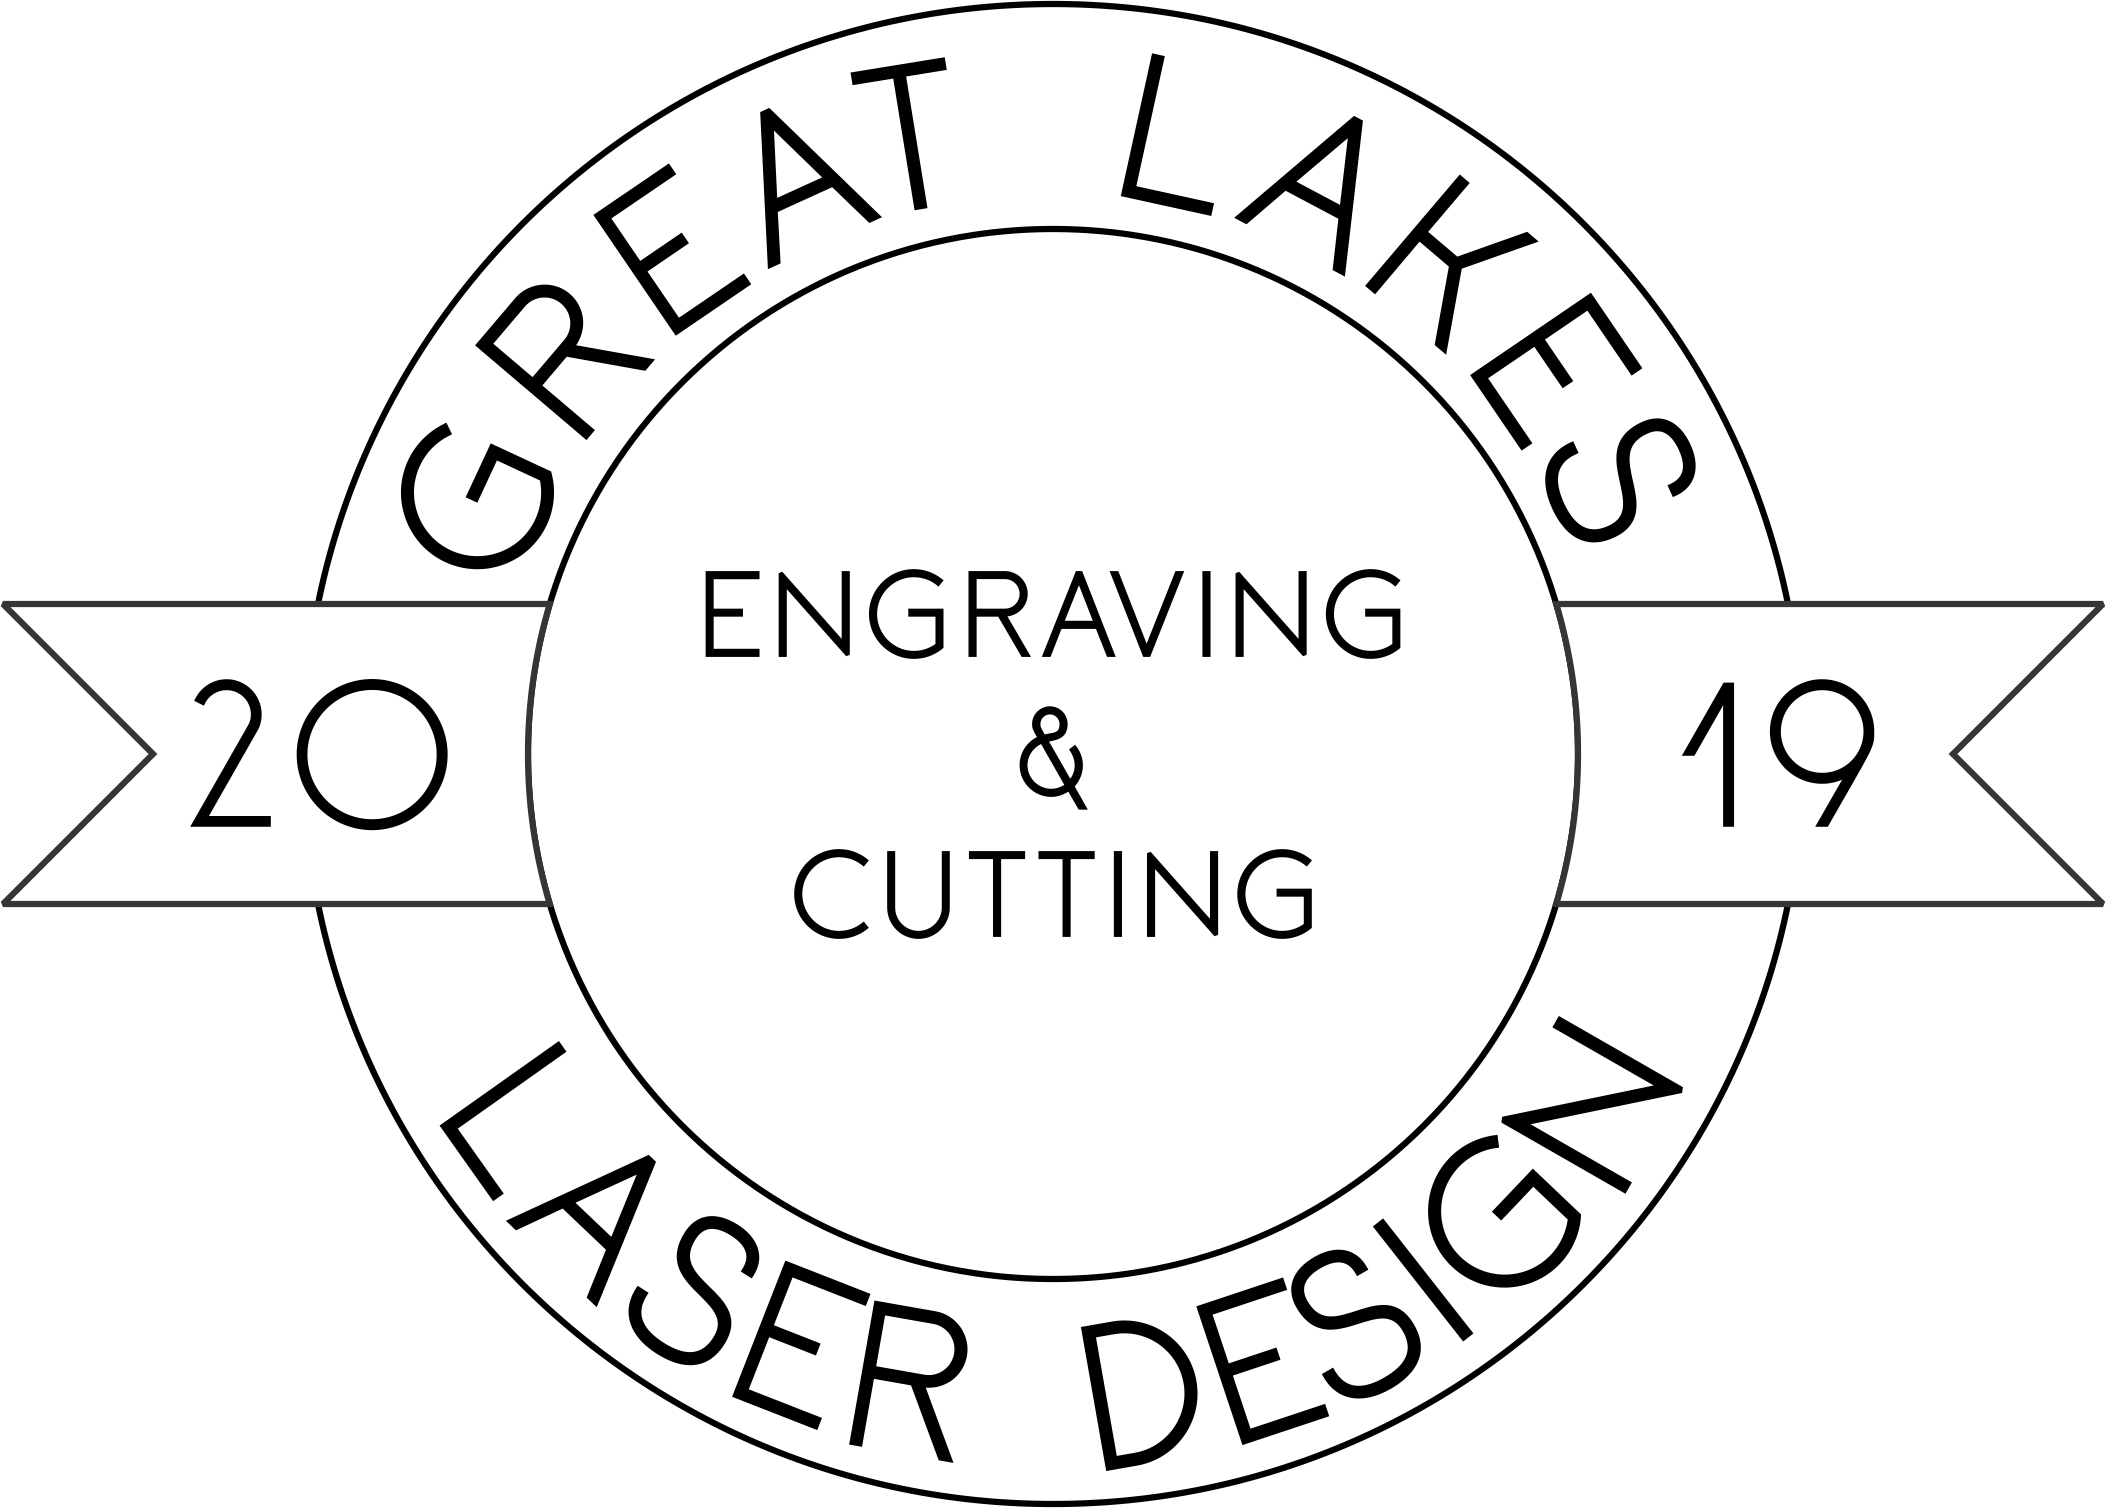 Great Lakes Laser Design